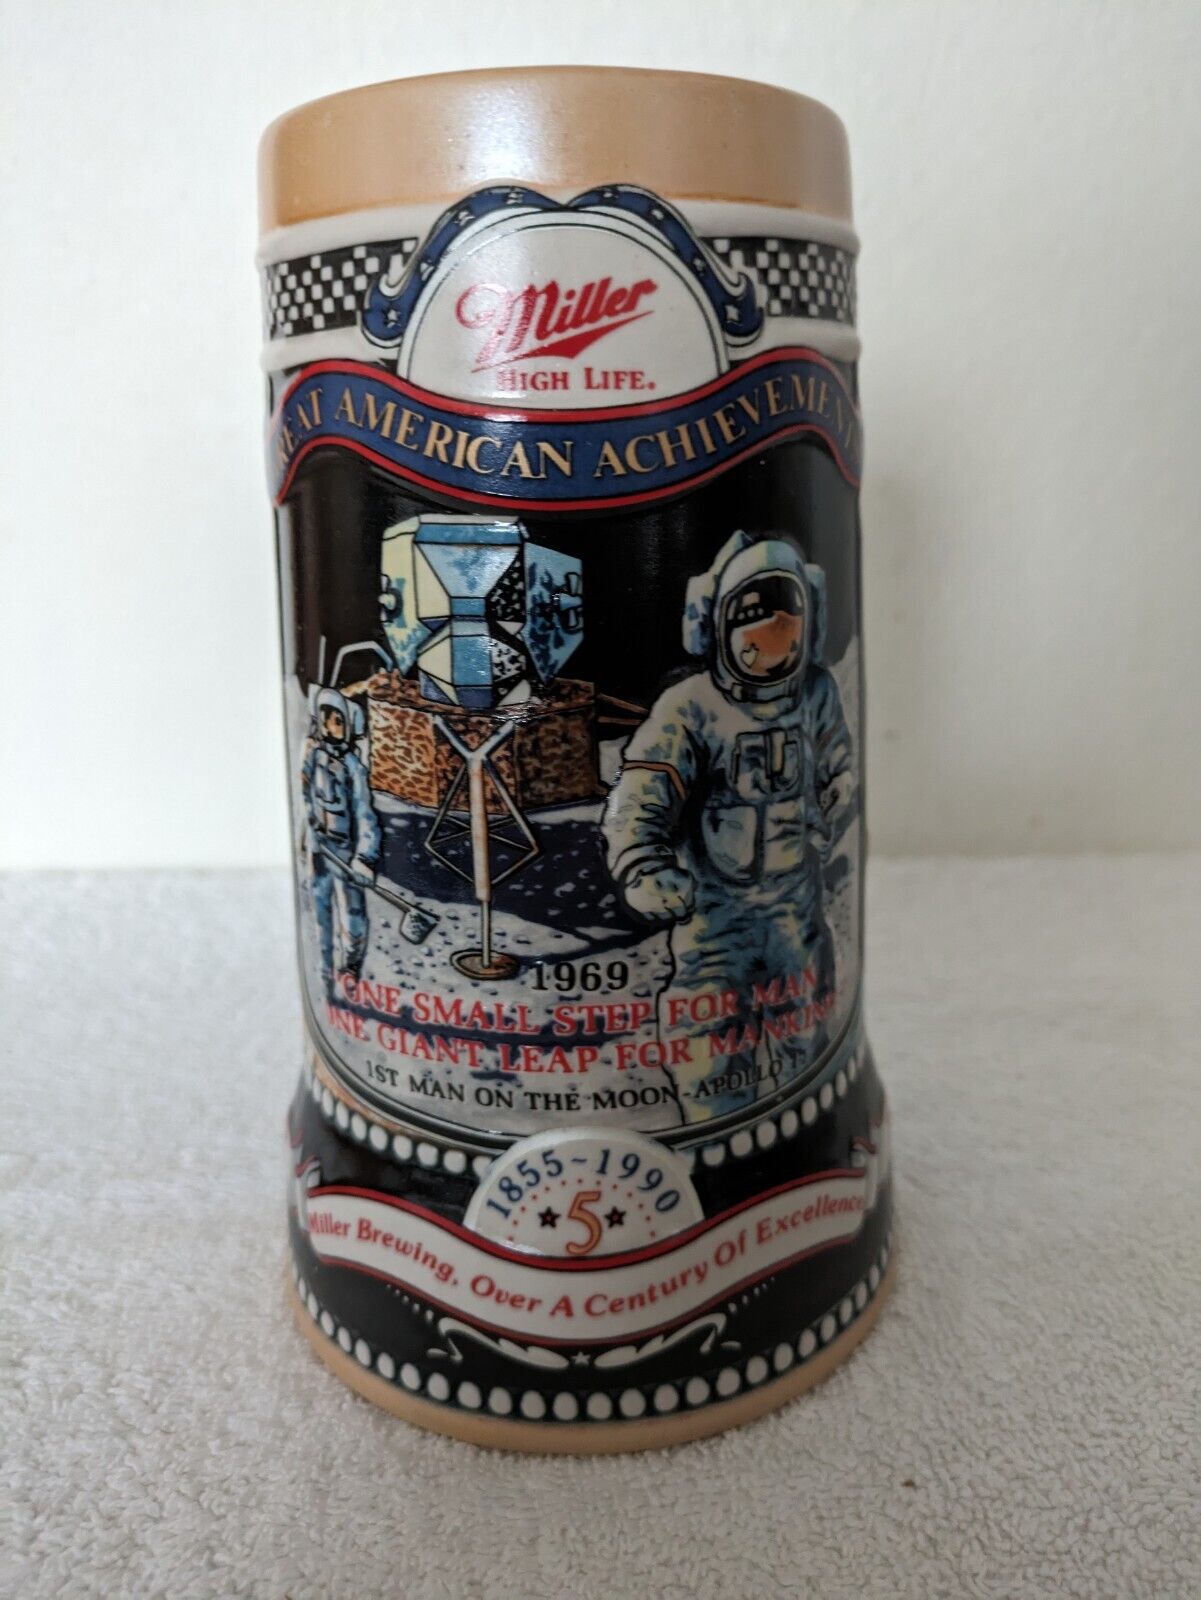 NASA 1855-1990 Miller Beer Stein Mug Great American Achievements 1969 Apollo 11